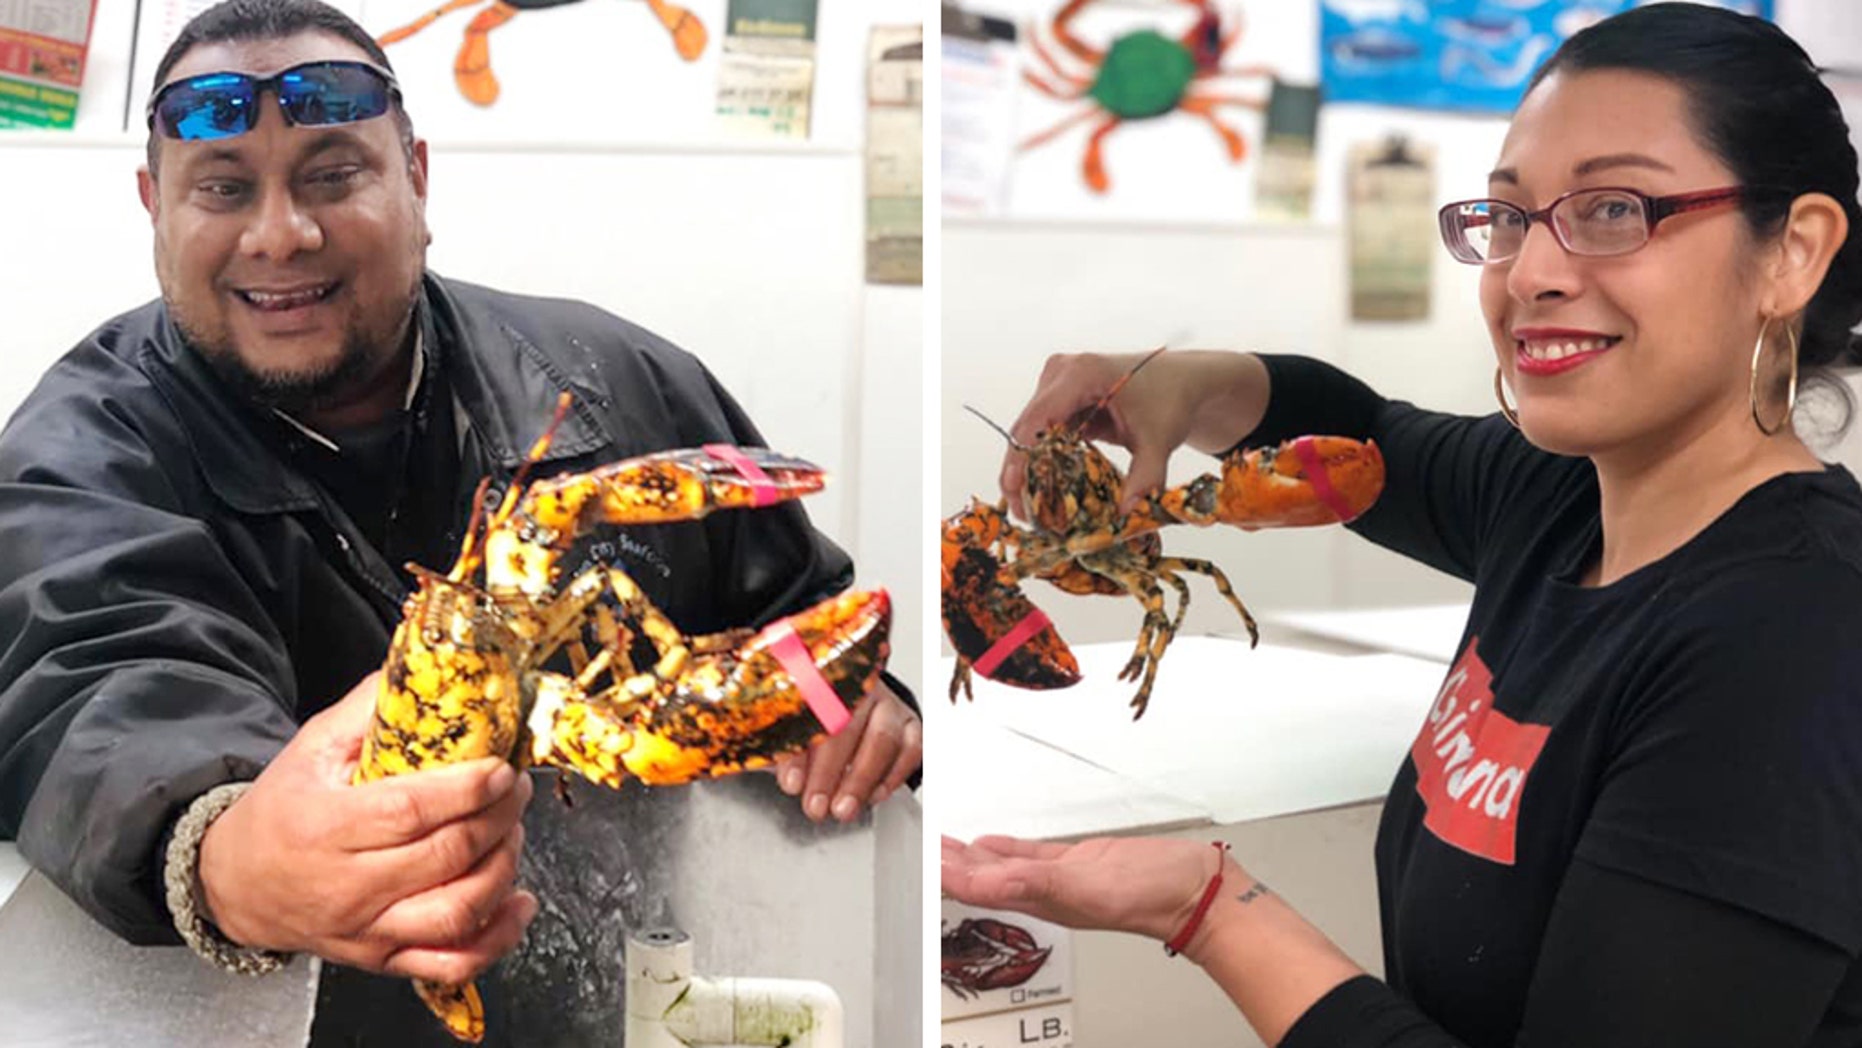 Rare calico lobster found at Maryland market, donated to aquarium